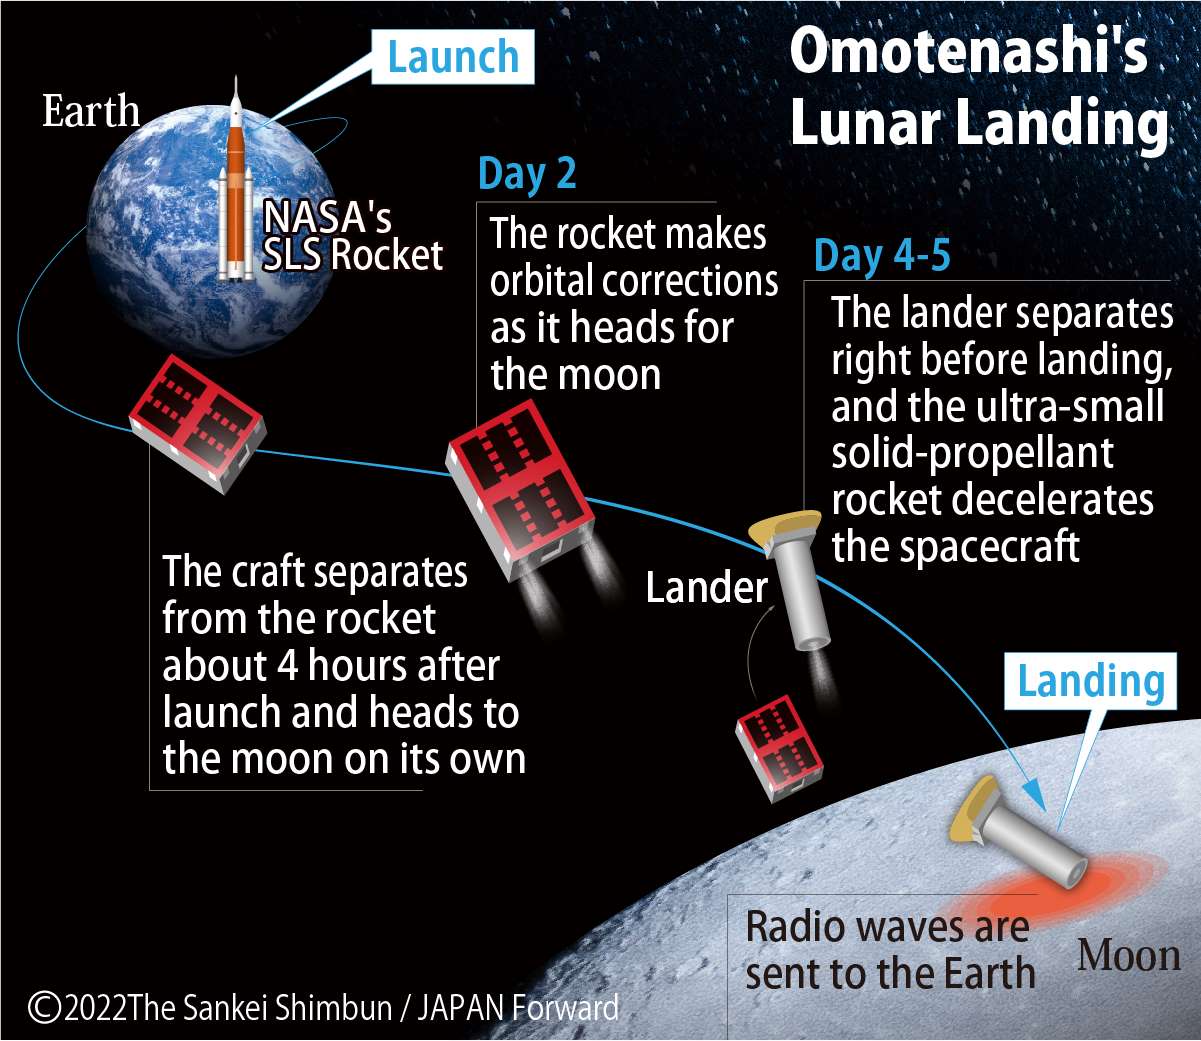 Omotenashi lunar lander